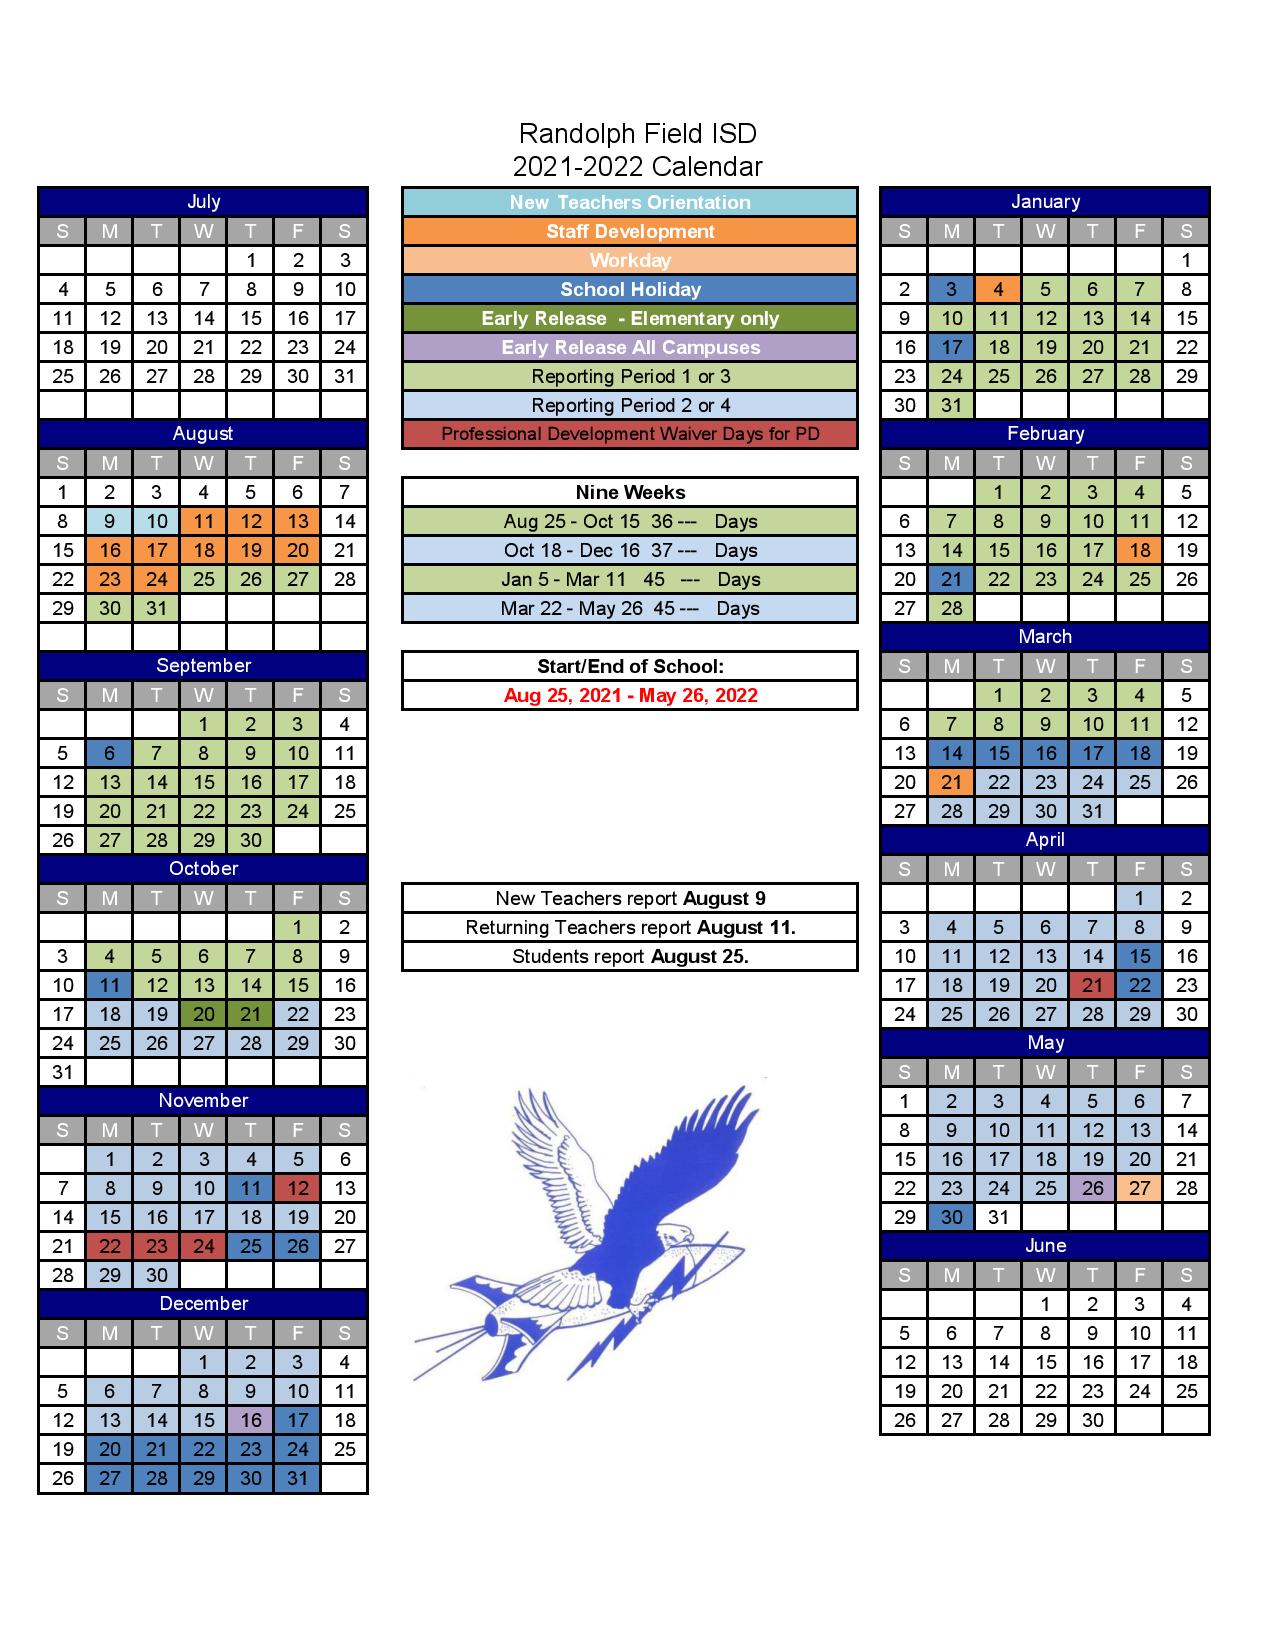 randolph-field-independent-school-district-calendar-2021-2022